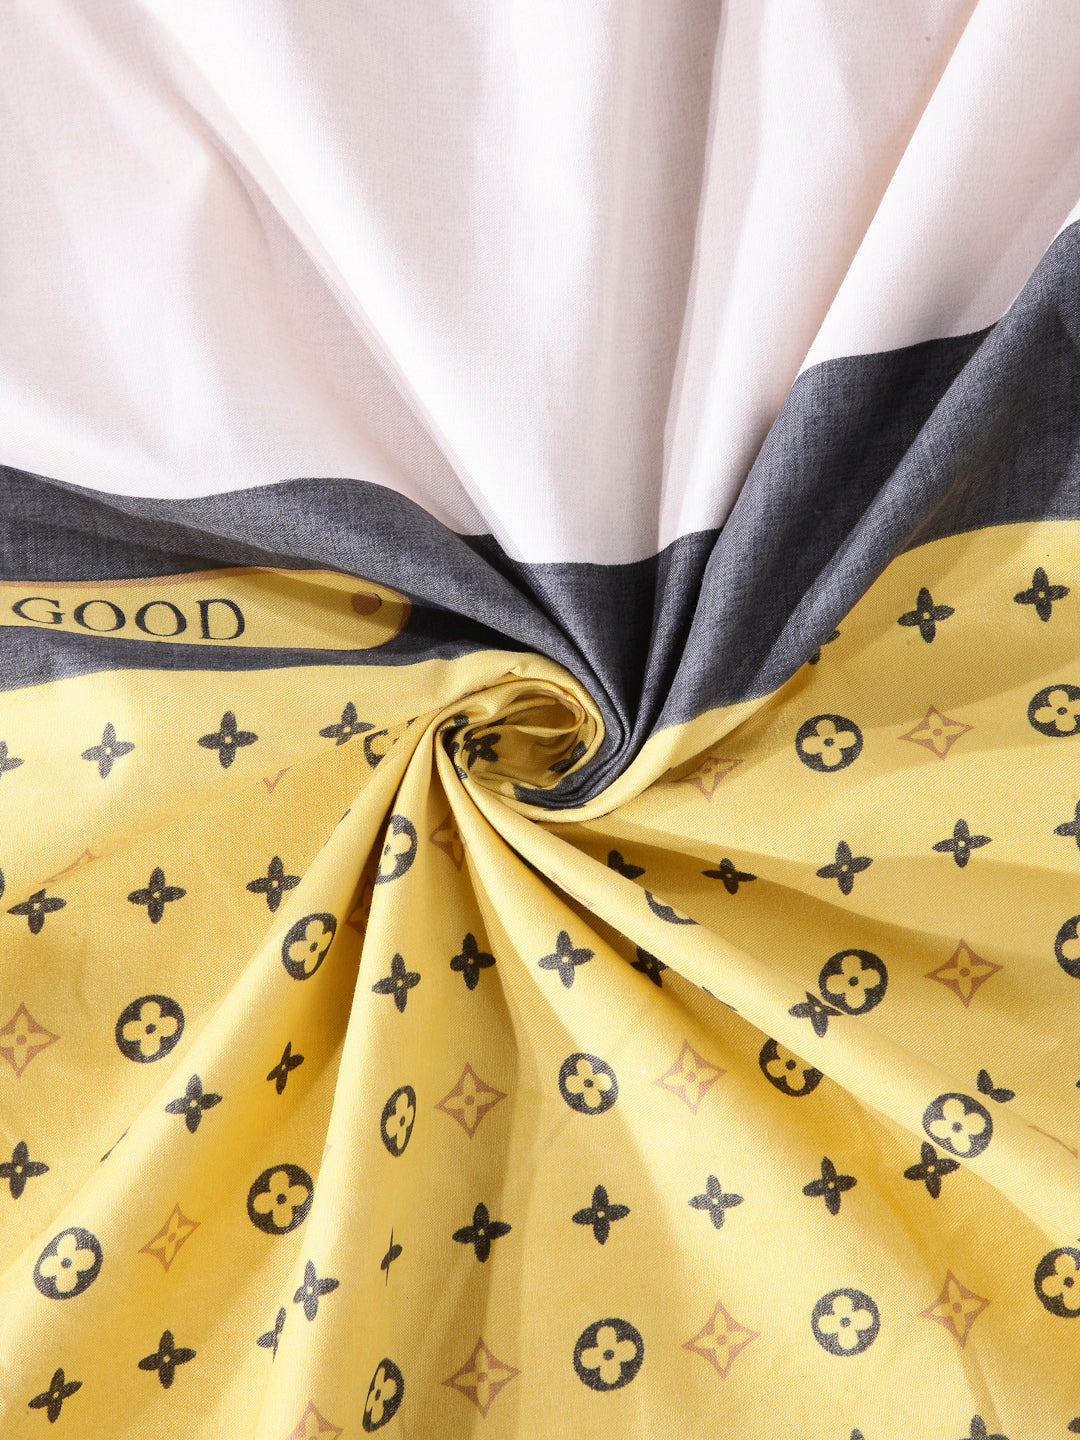 Arrabi Multi Stripes TC Cotton Blend Super King Size Bookfold Bedsheet with 2 Pillow Covers (270 X 260 cm)